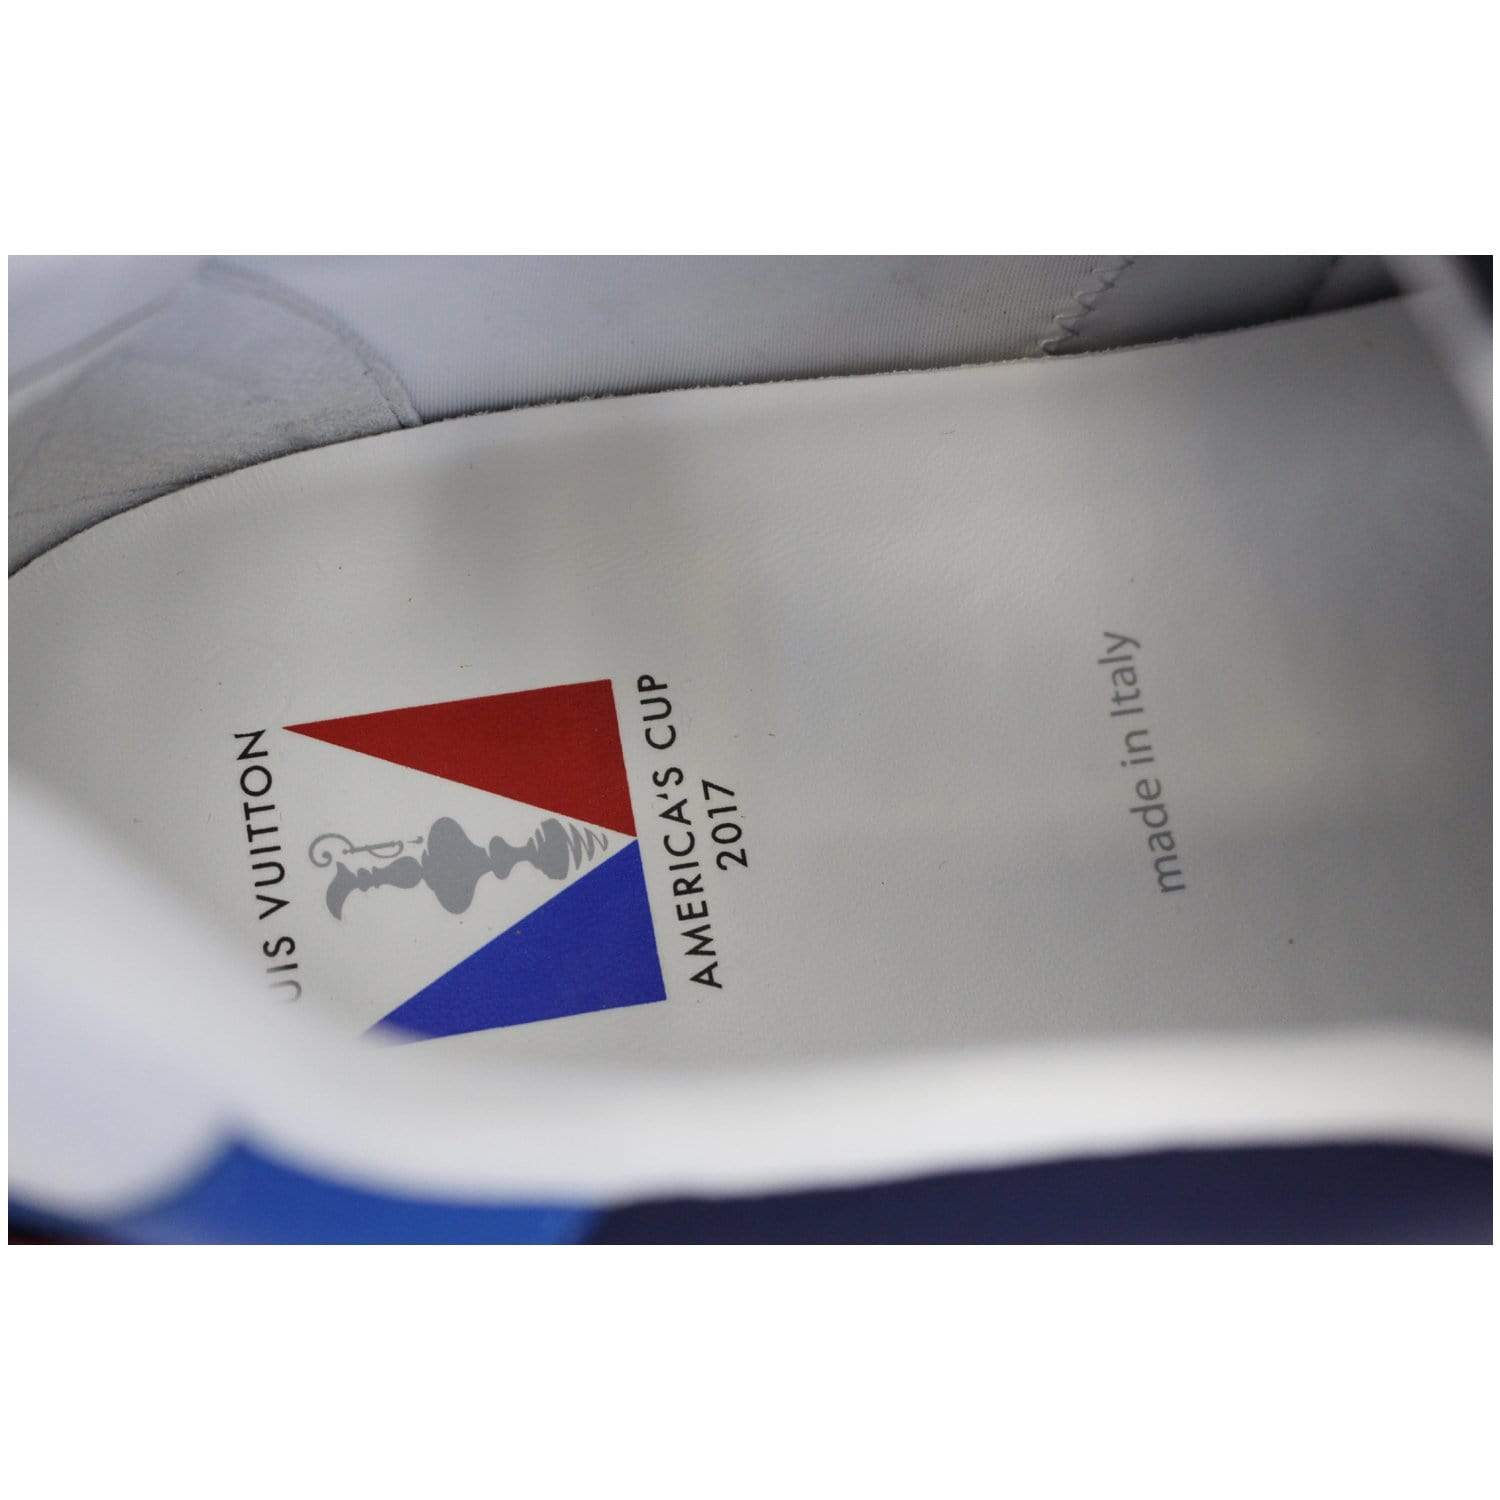 Louis Vuitton Tri Color Neoprene America's Cup Regatta Sneakers Size 43.5  Louis Vuitton